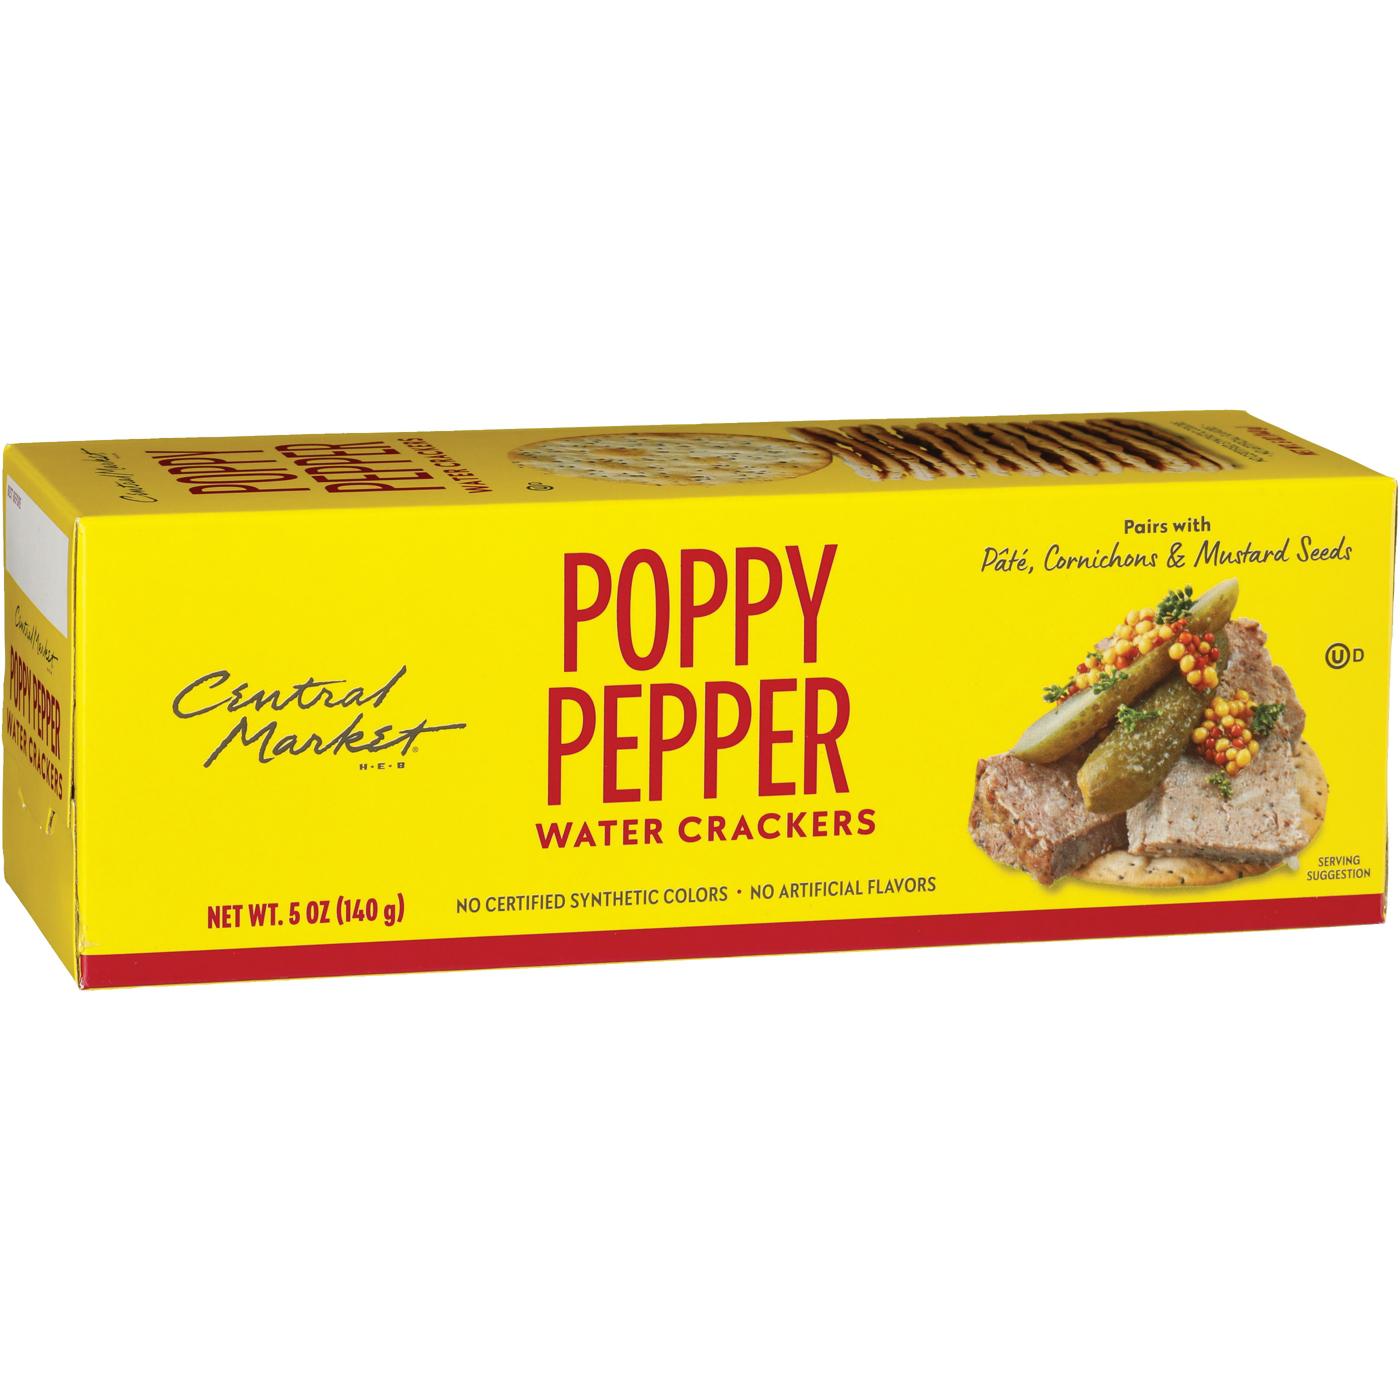 Central Market Poppy Pepper Crackers; image 1 of 2